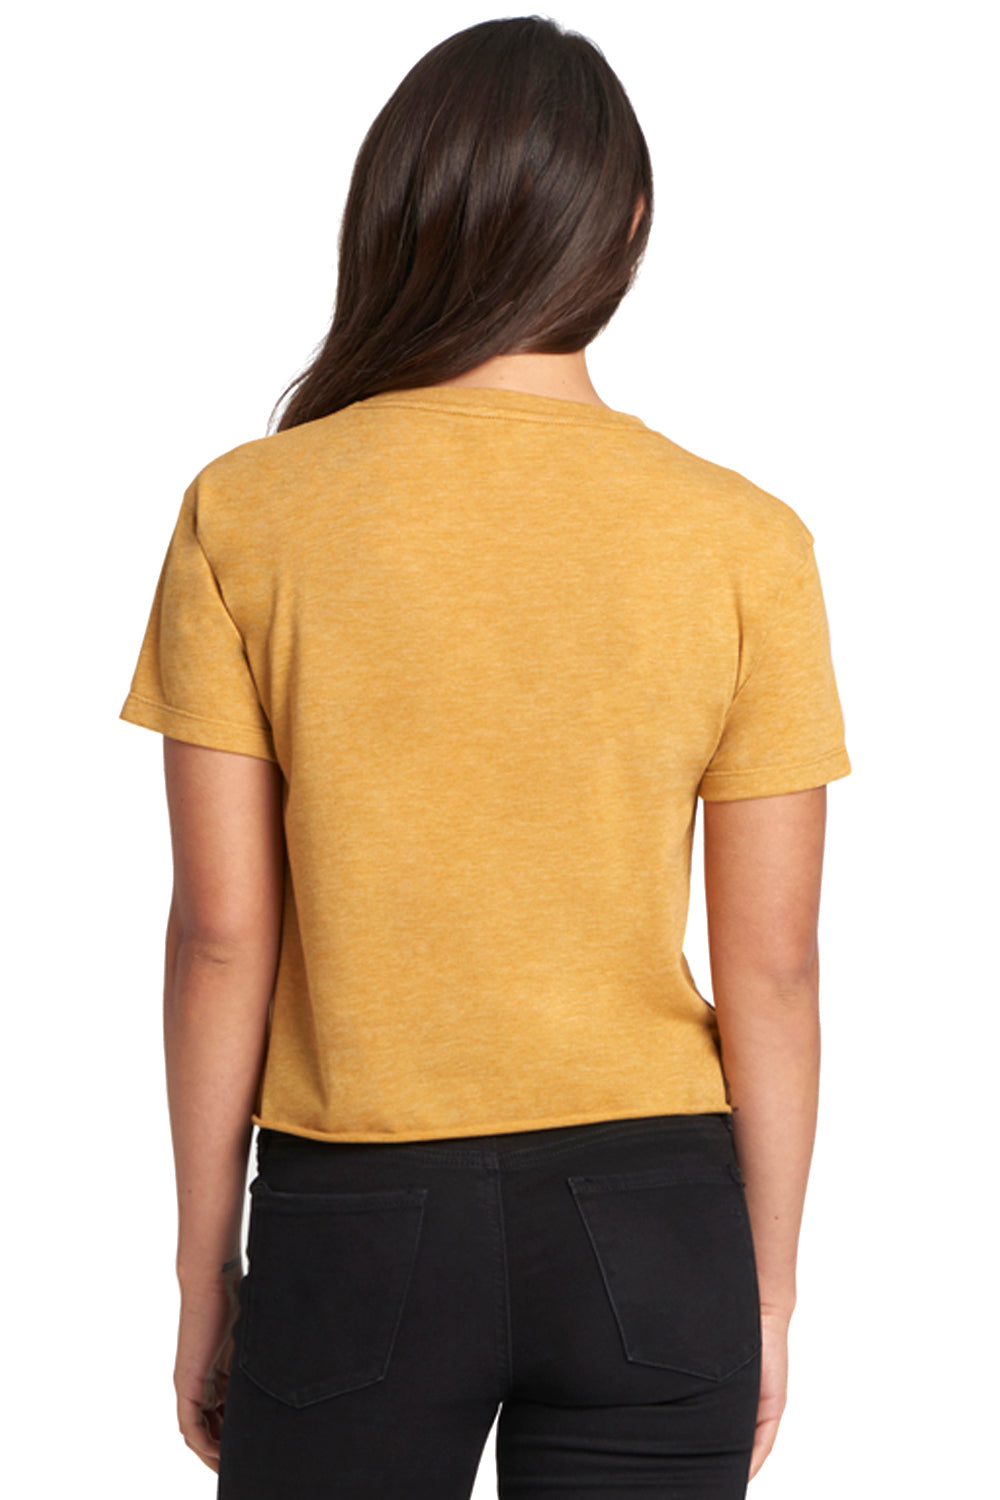 Next Level N5080 Womens Festival Cali Crop Short Sleeve Crewneck T-Shirt Antique Gold Back